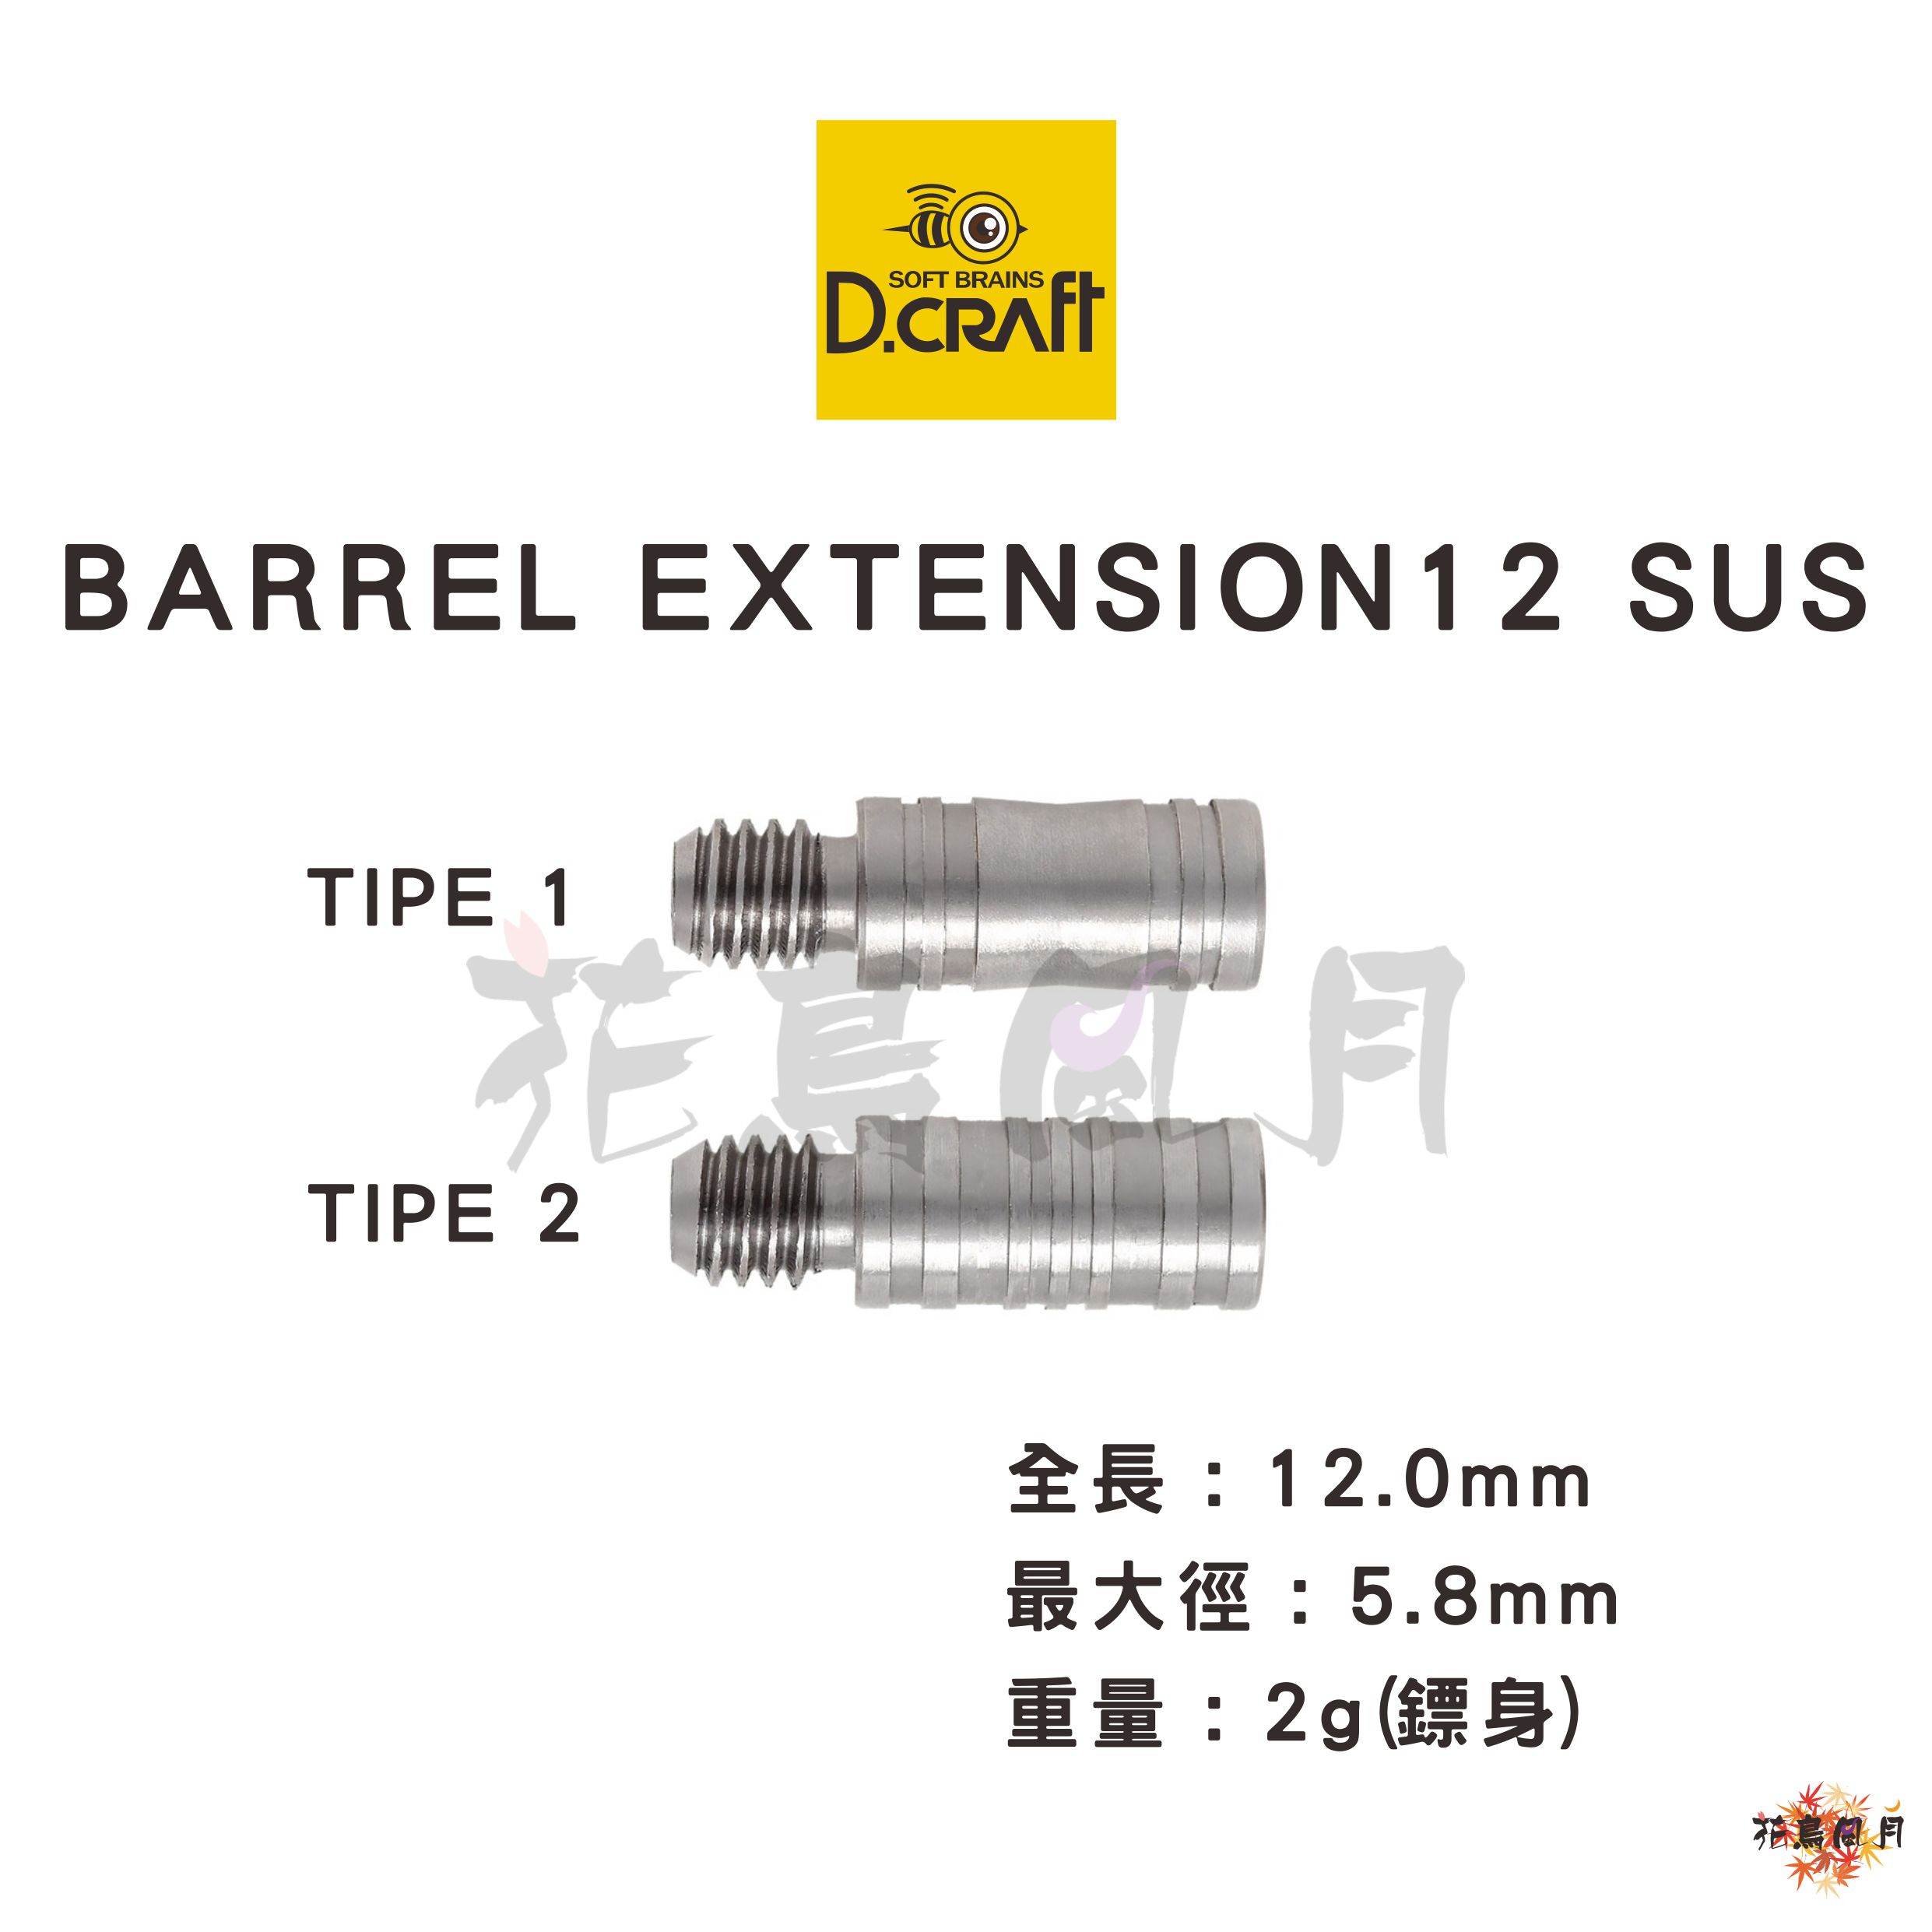 D.CRAFT-BARREL-EXTENSION12-SUS.jpg